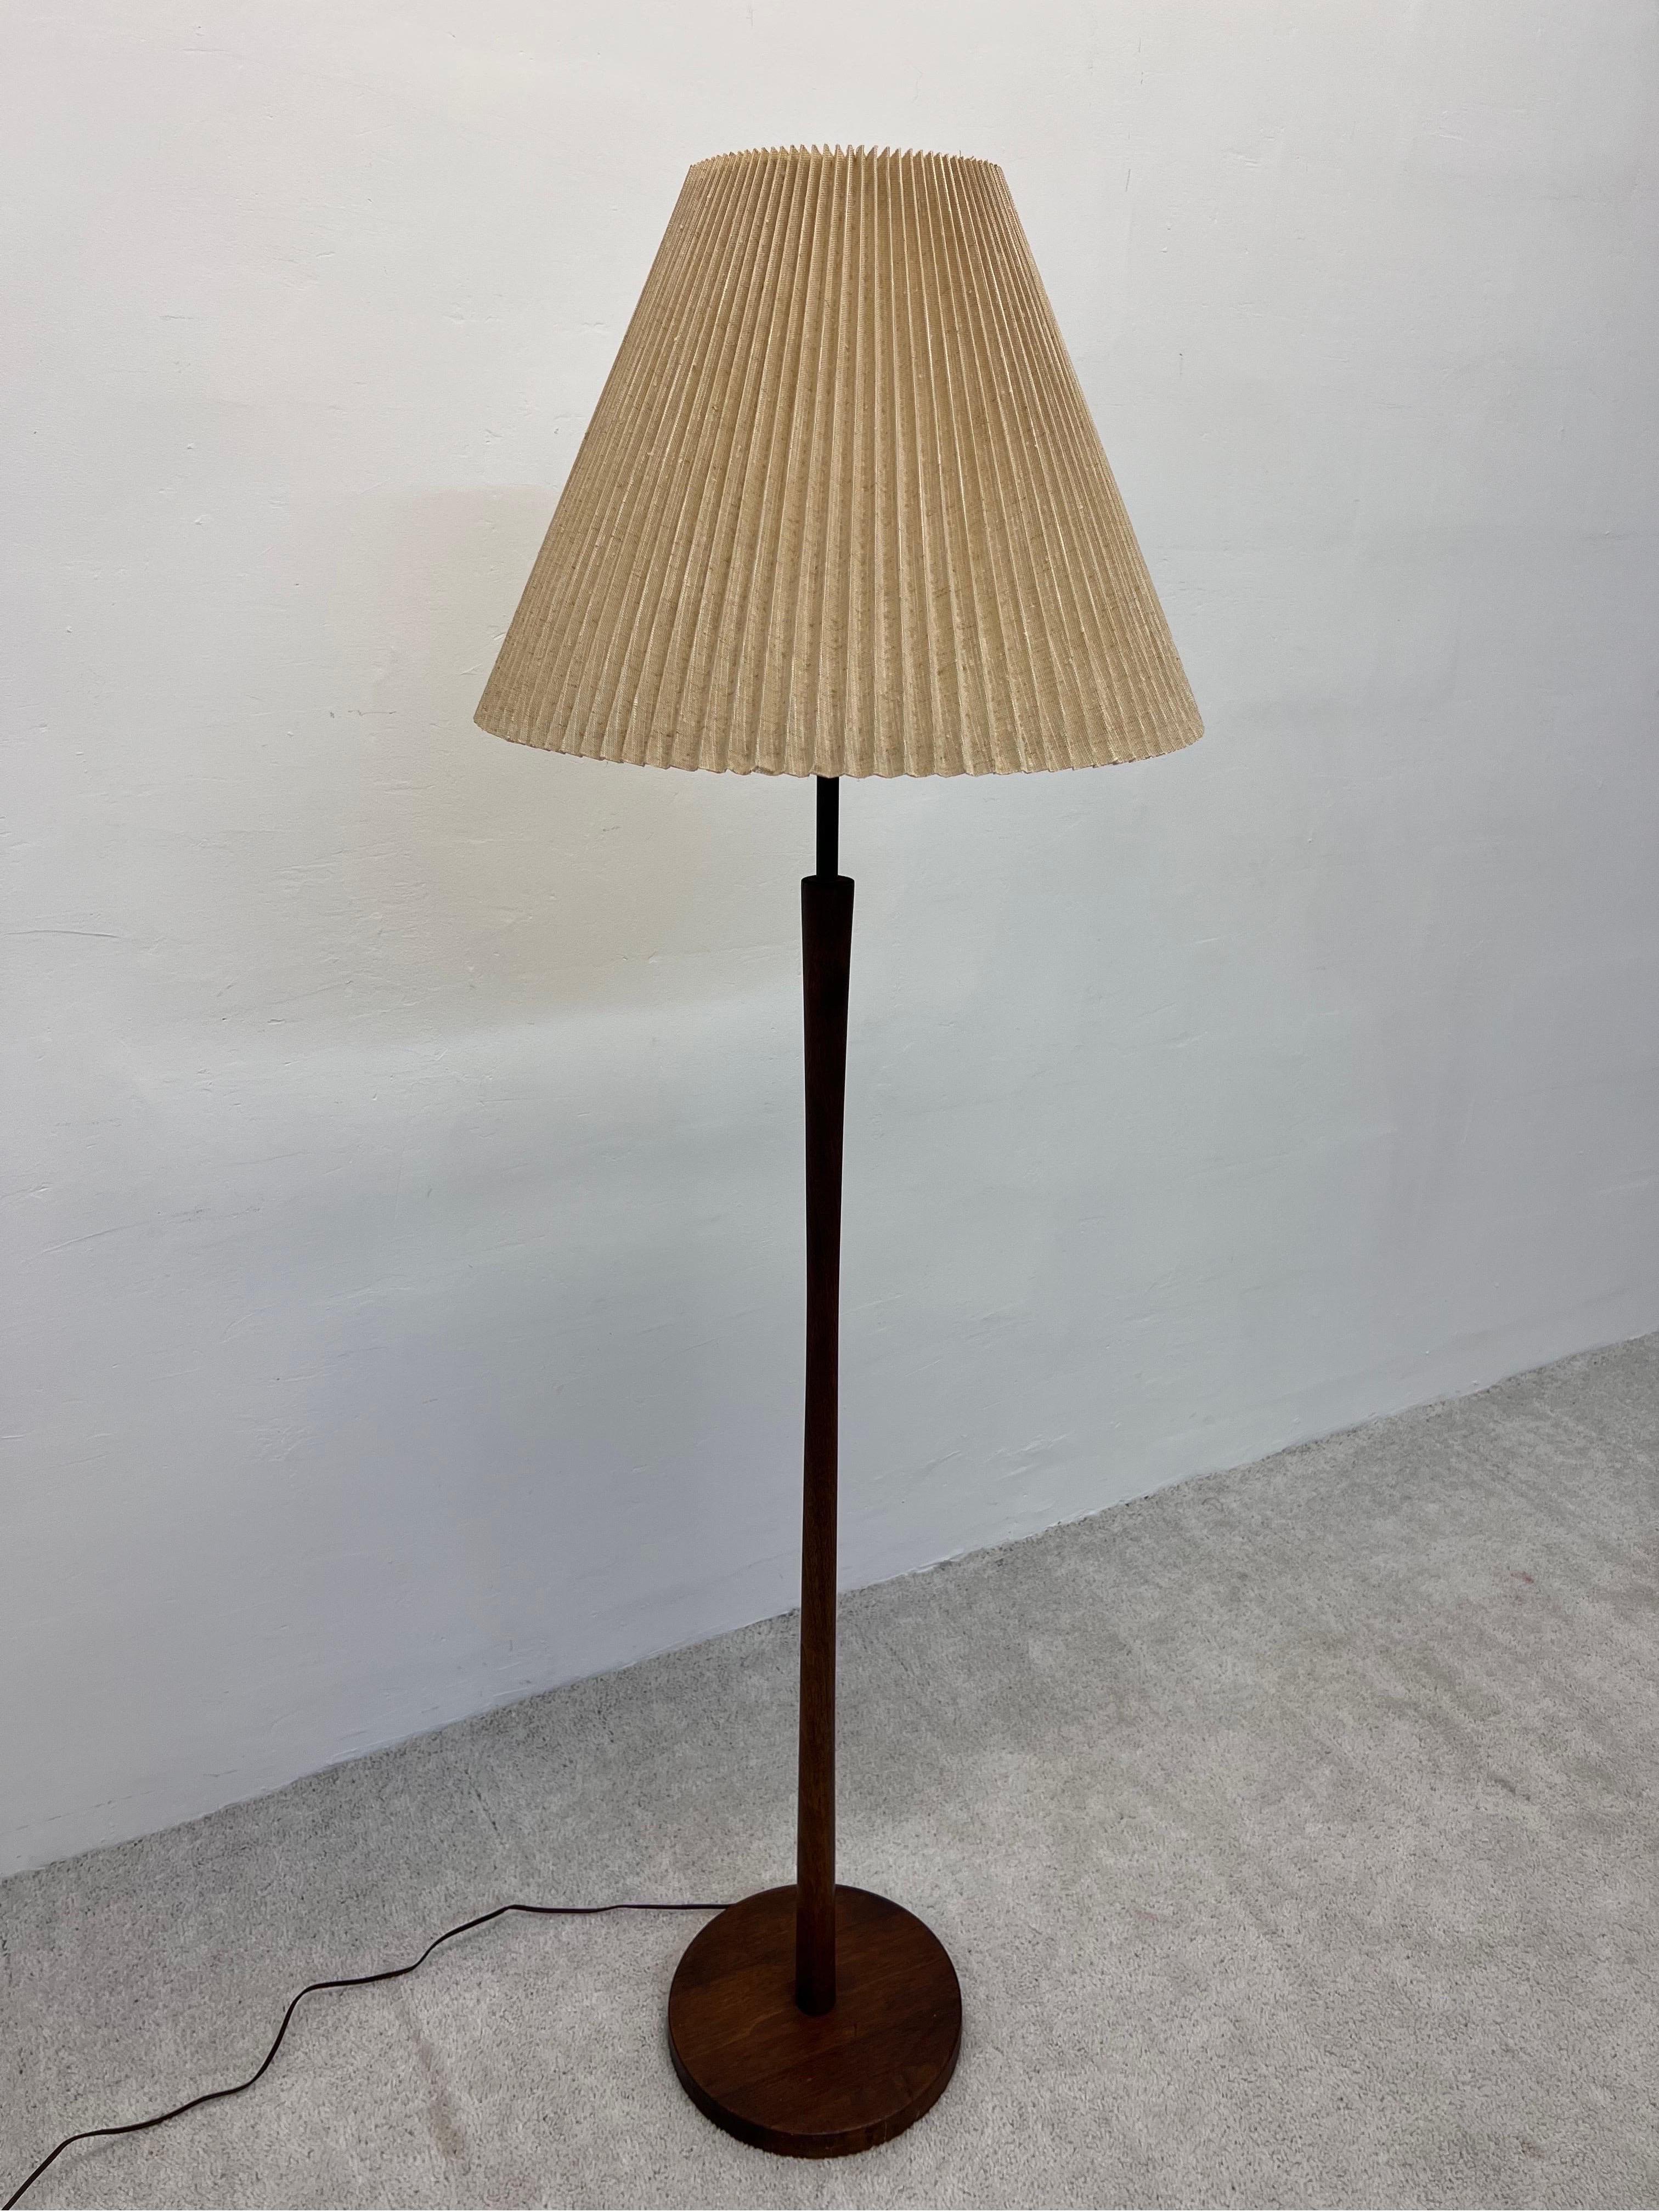 Mid-century Danish teak floor lamp with original pleated linen shade from the 1960s.